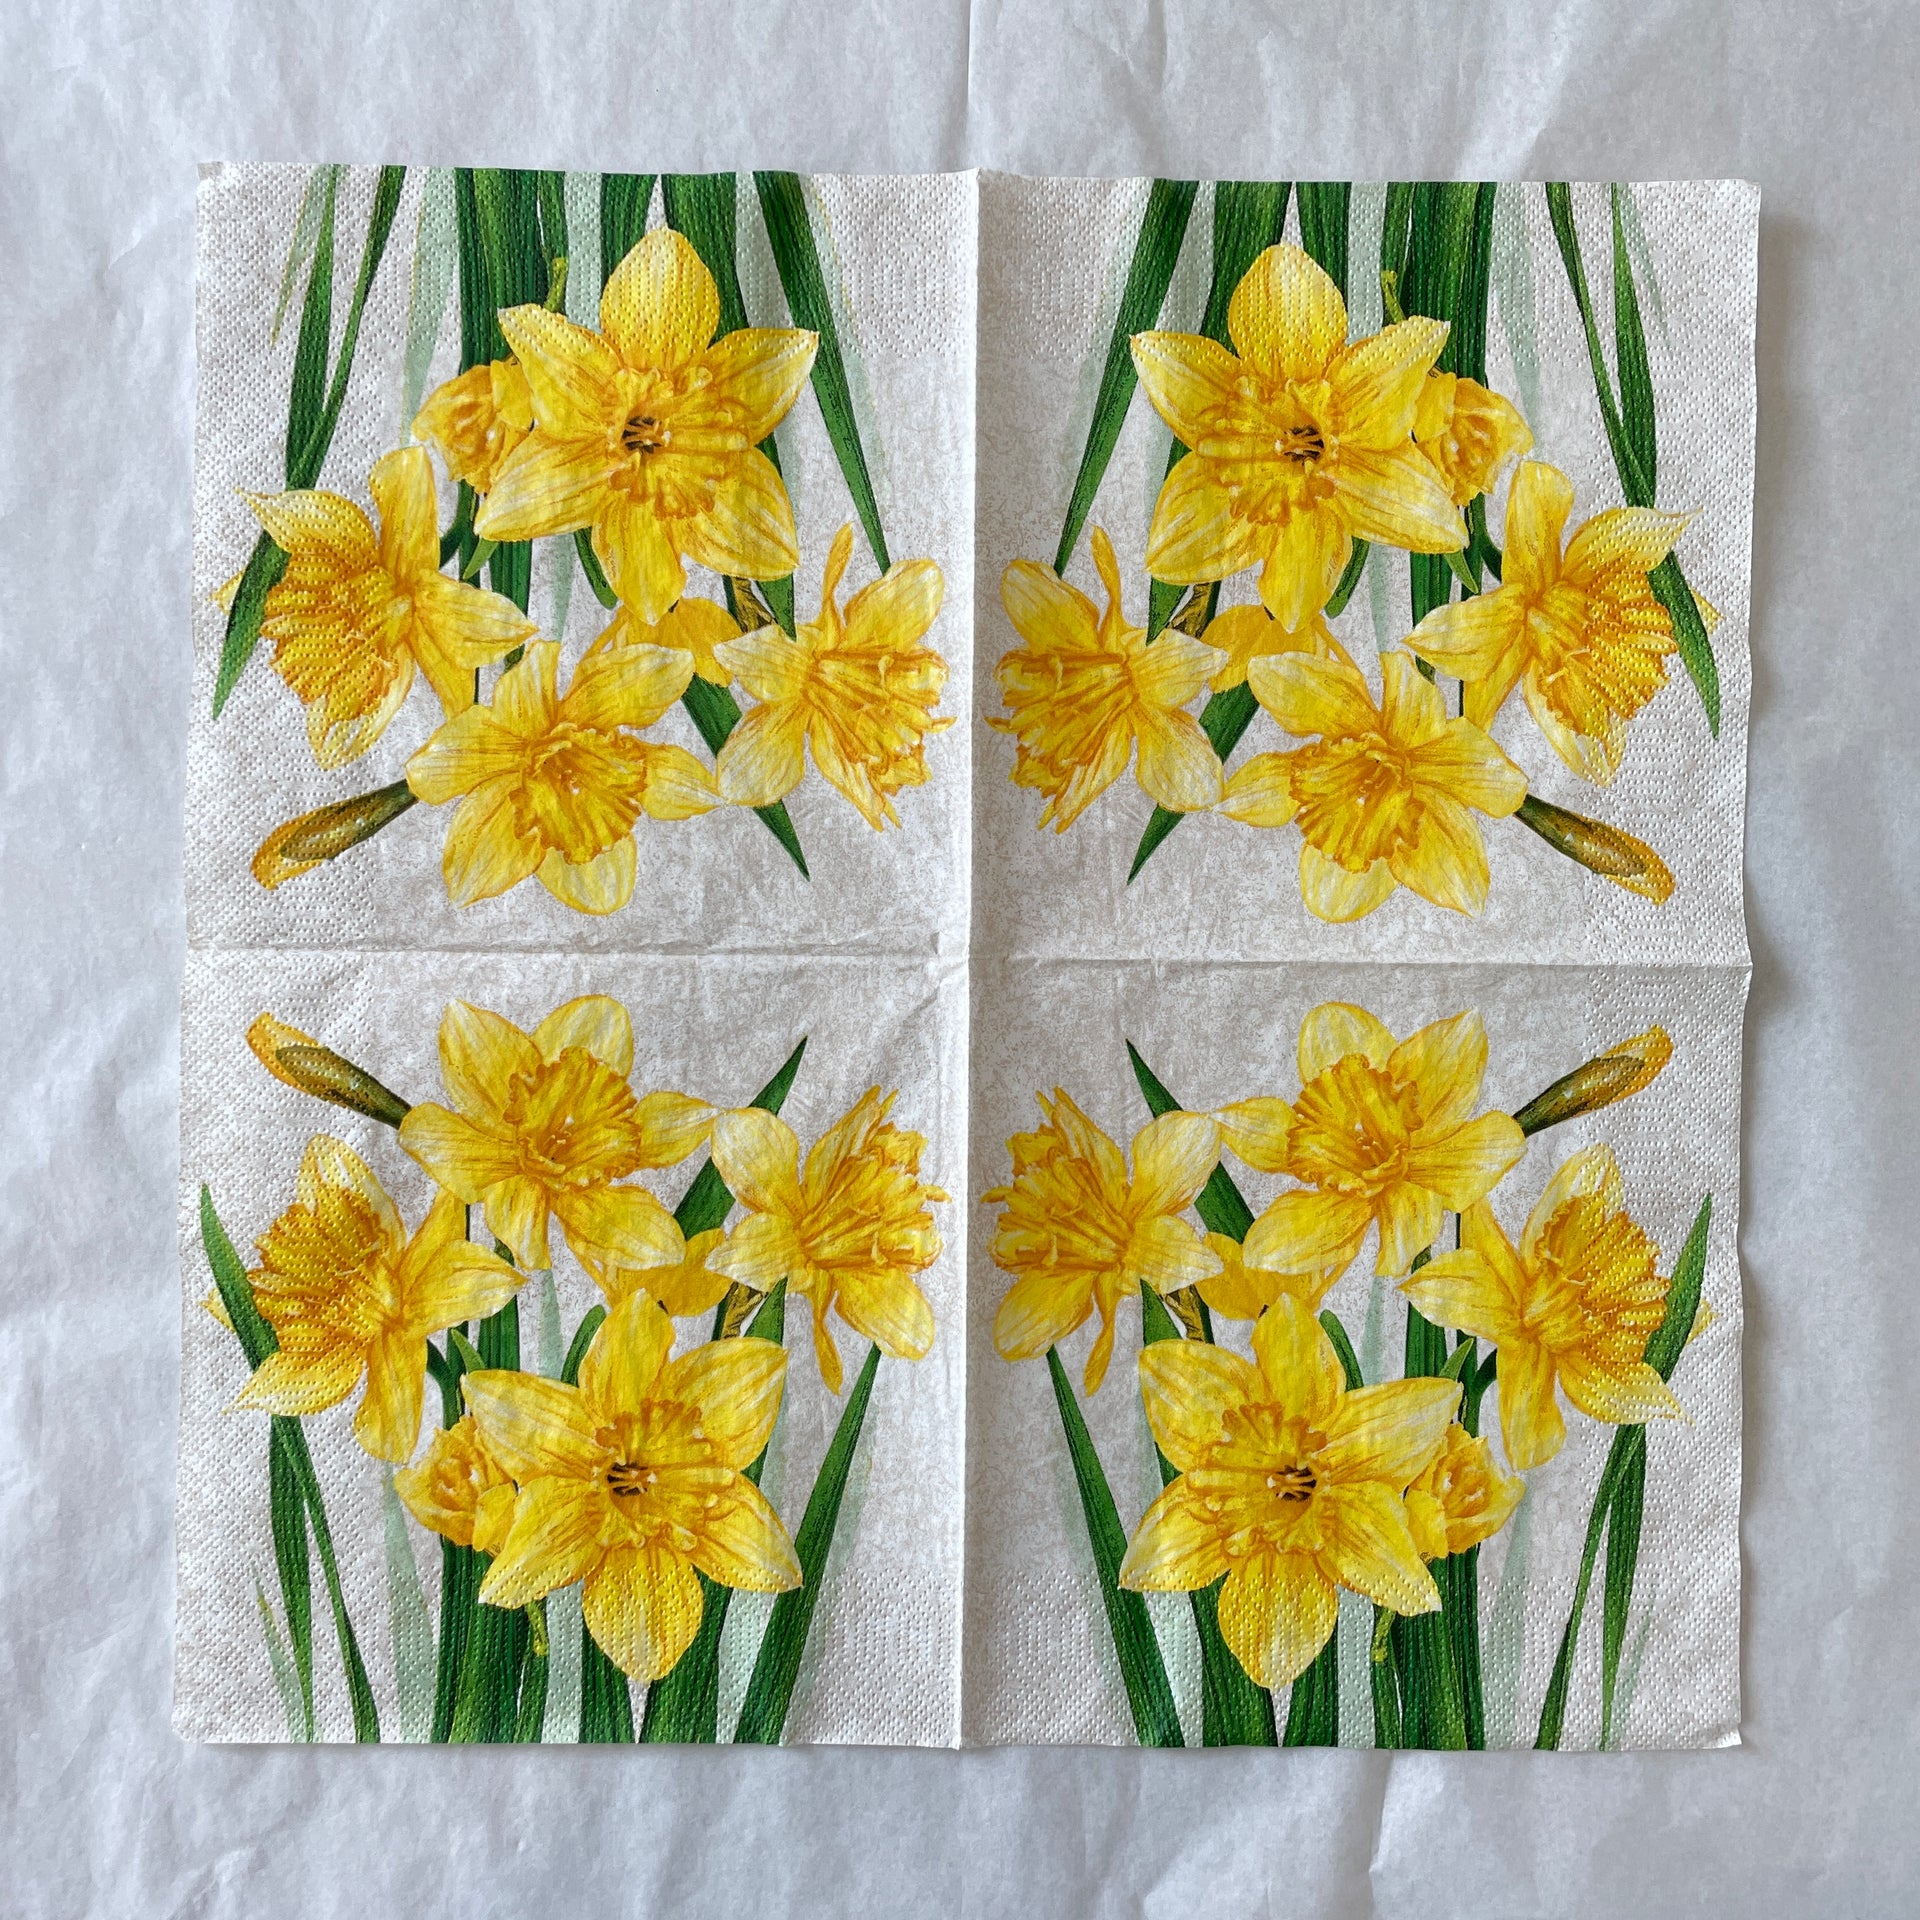 Napkin - Bunch of Yellow Daffodils